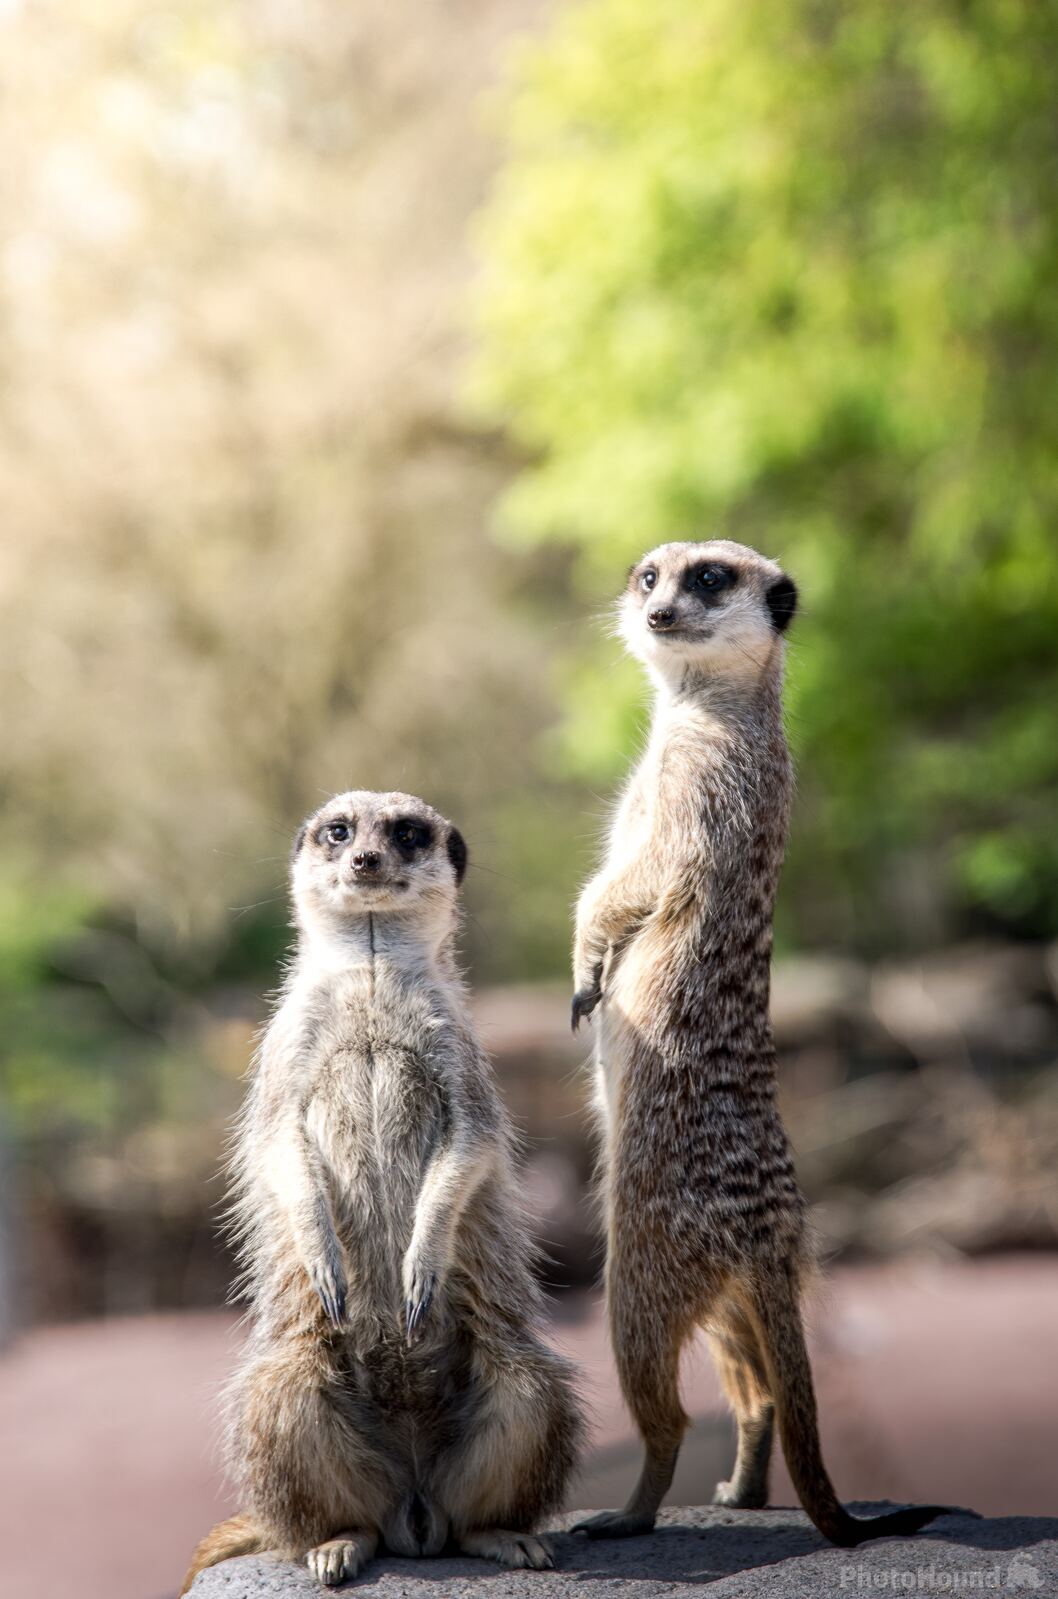 Image of Copenhagen Zoo by Team PhotoHound